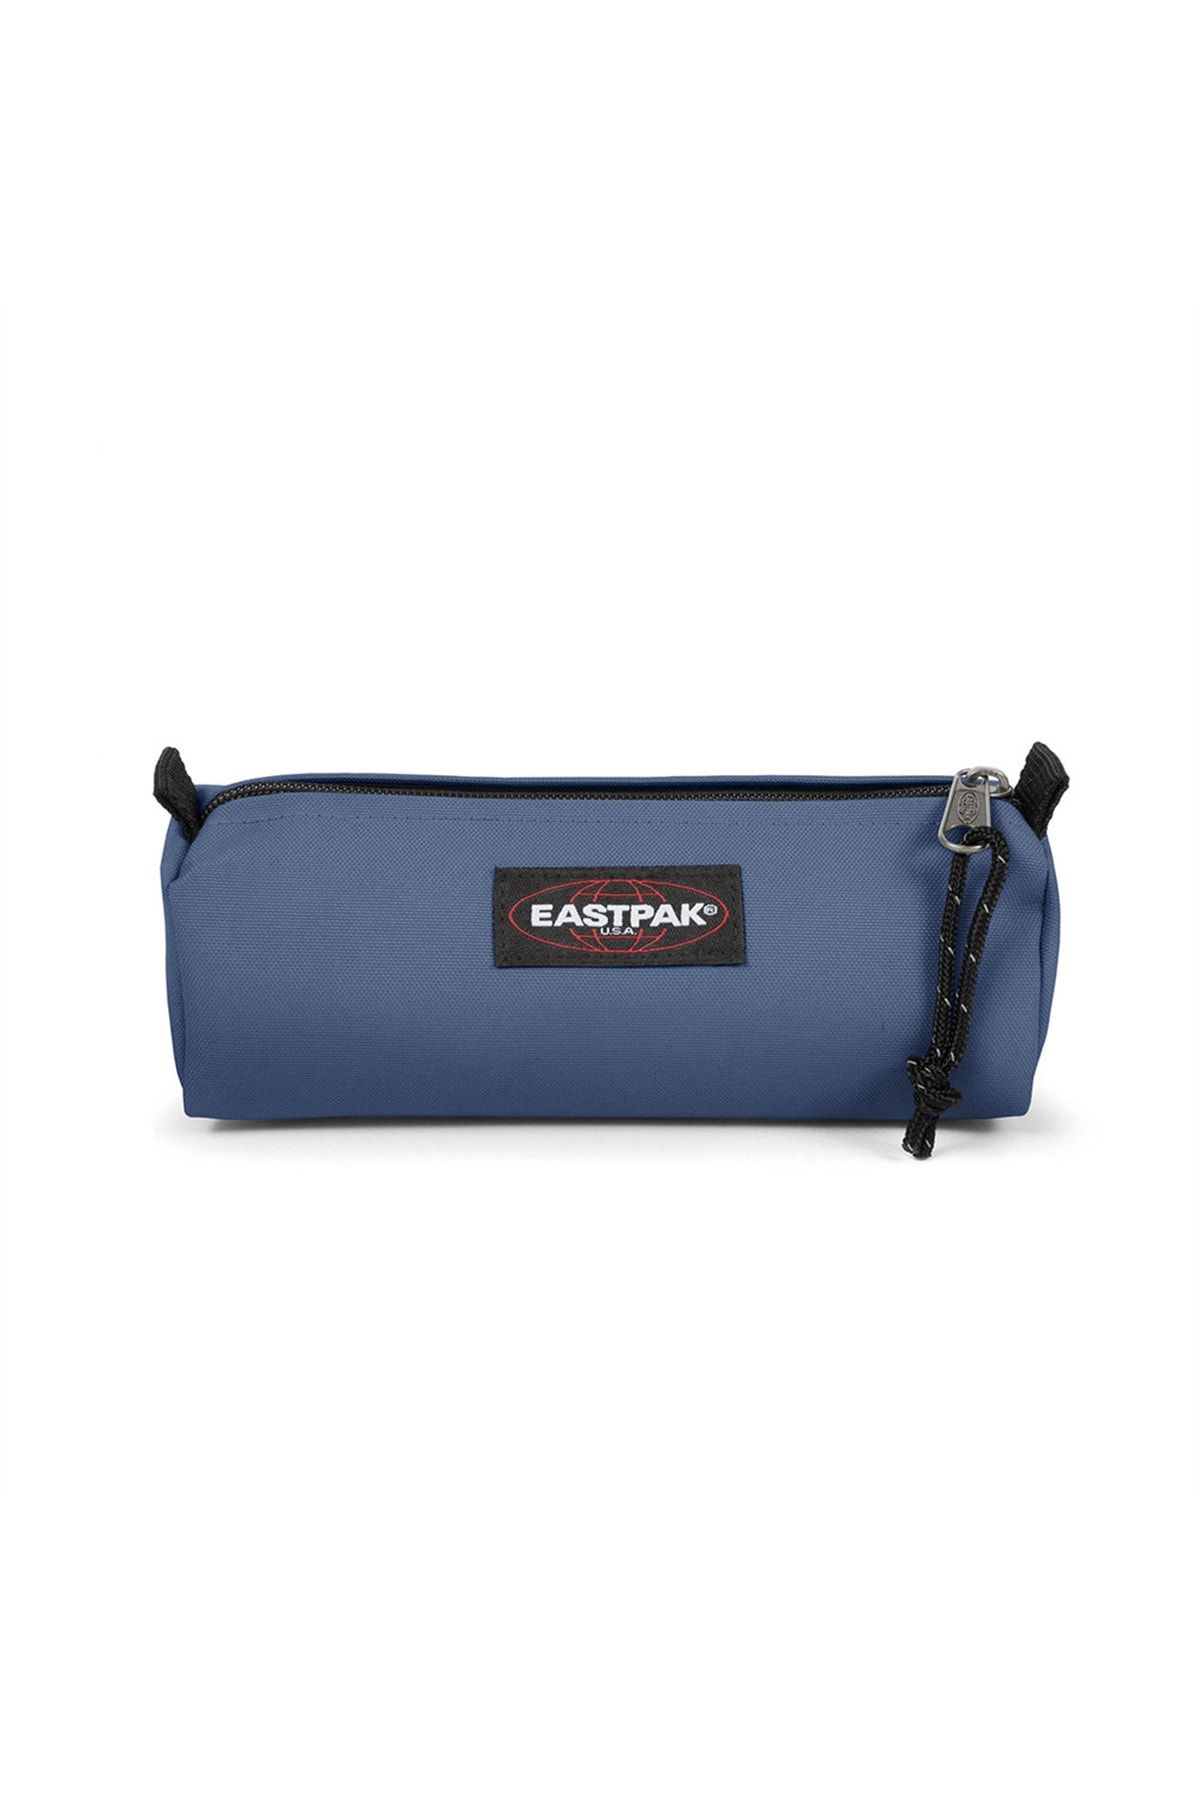 Eastpak Benchmark Single Powder Pilot Pen Bag Vfe-ek000372u591 - Trendyol